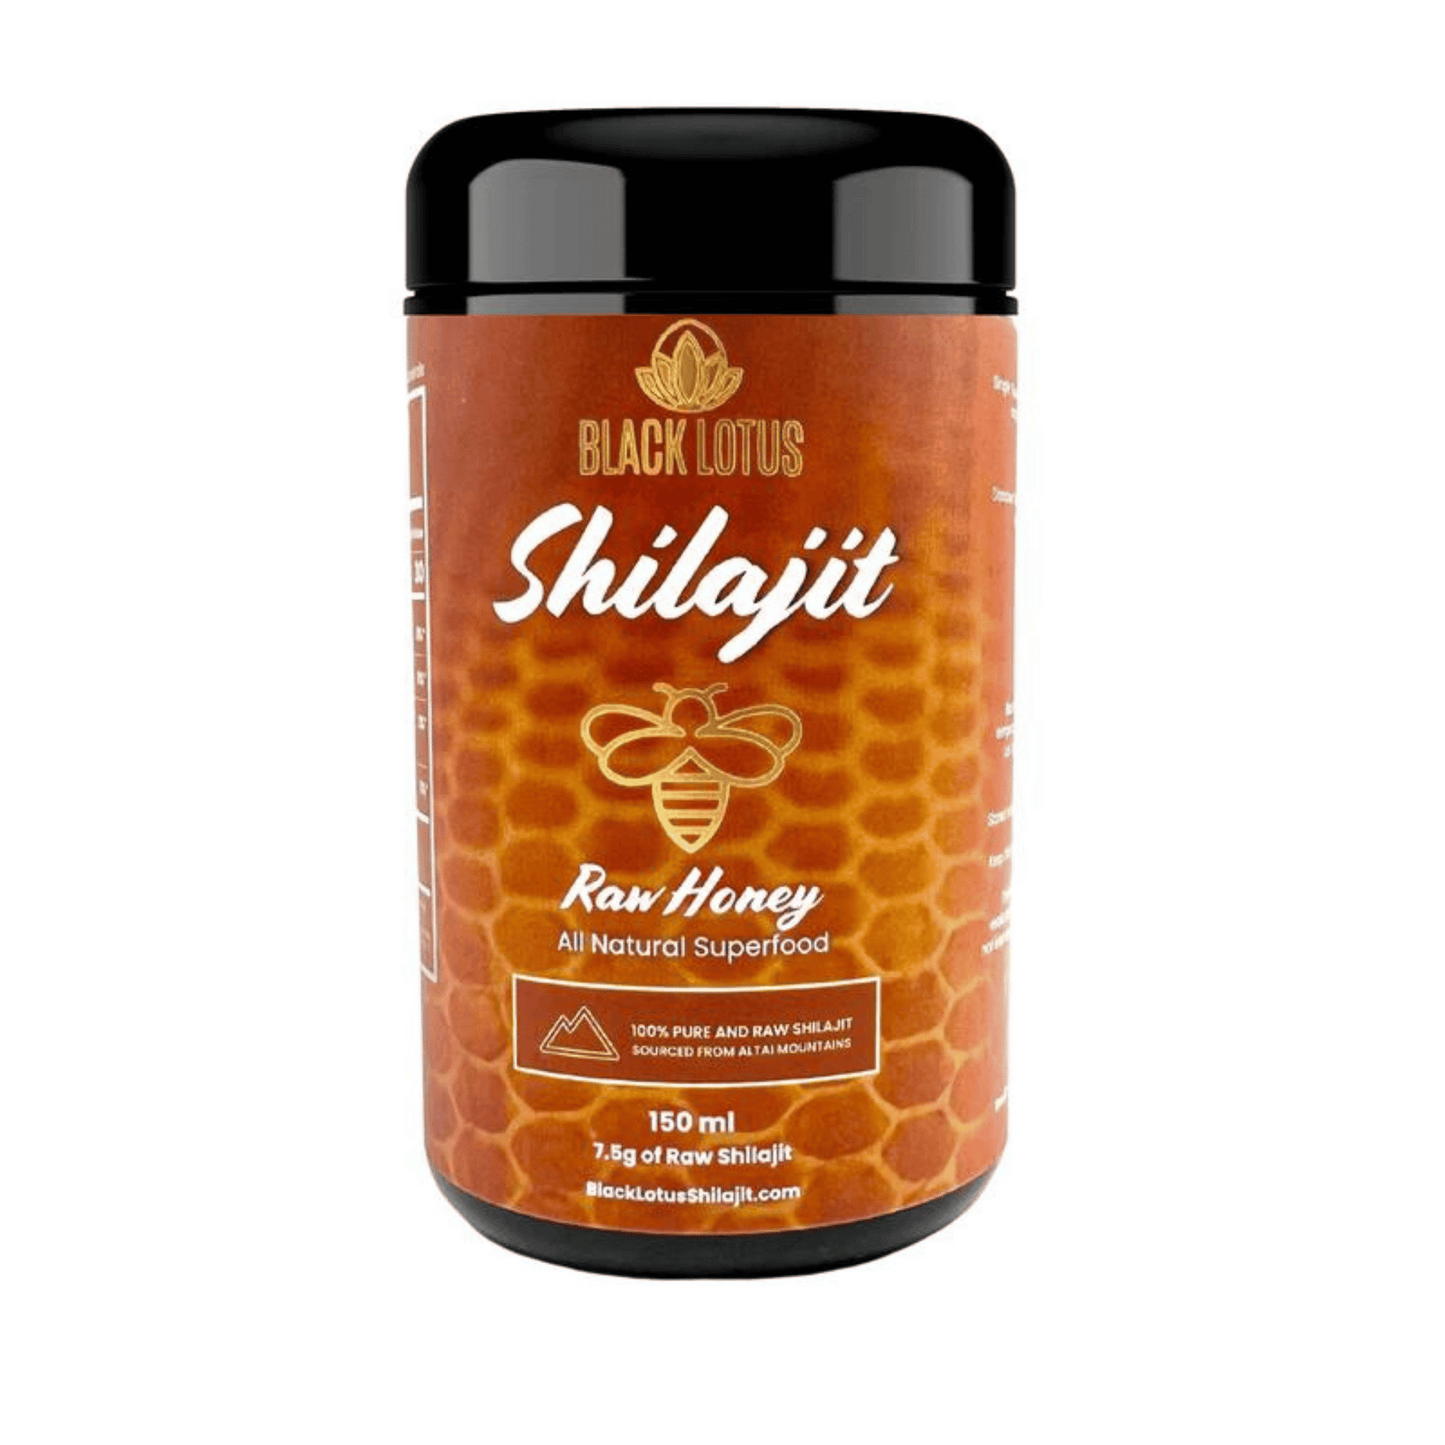 Primary Image of Shilajit Raw Honey